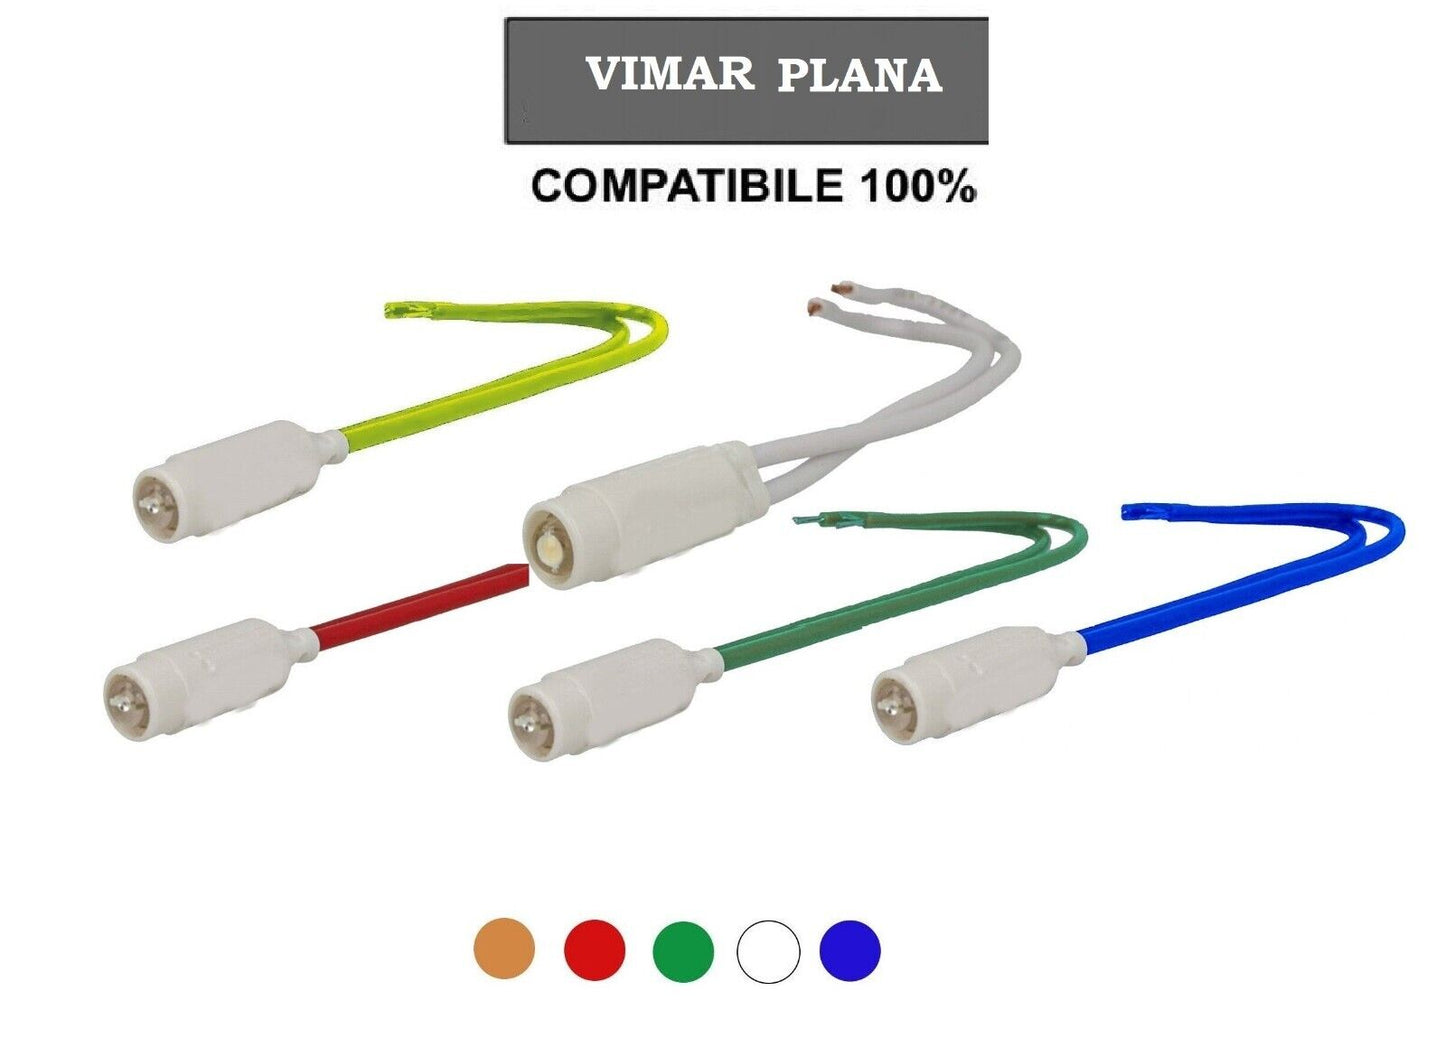 Lampada Led comando retro illuminazione tasti compatibile Vimar Plana ed Arke - puntoluceled